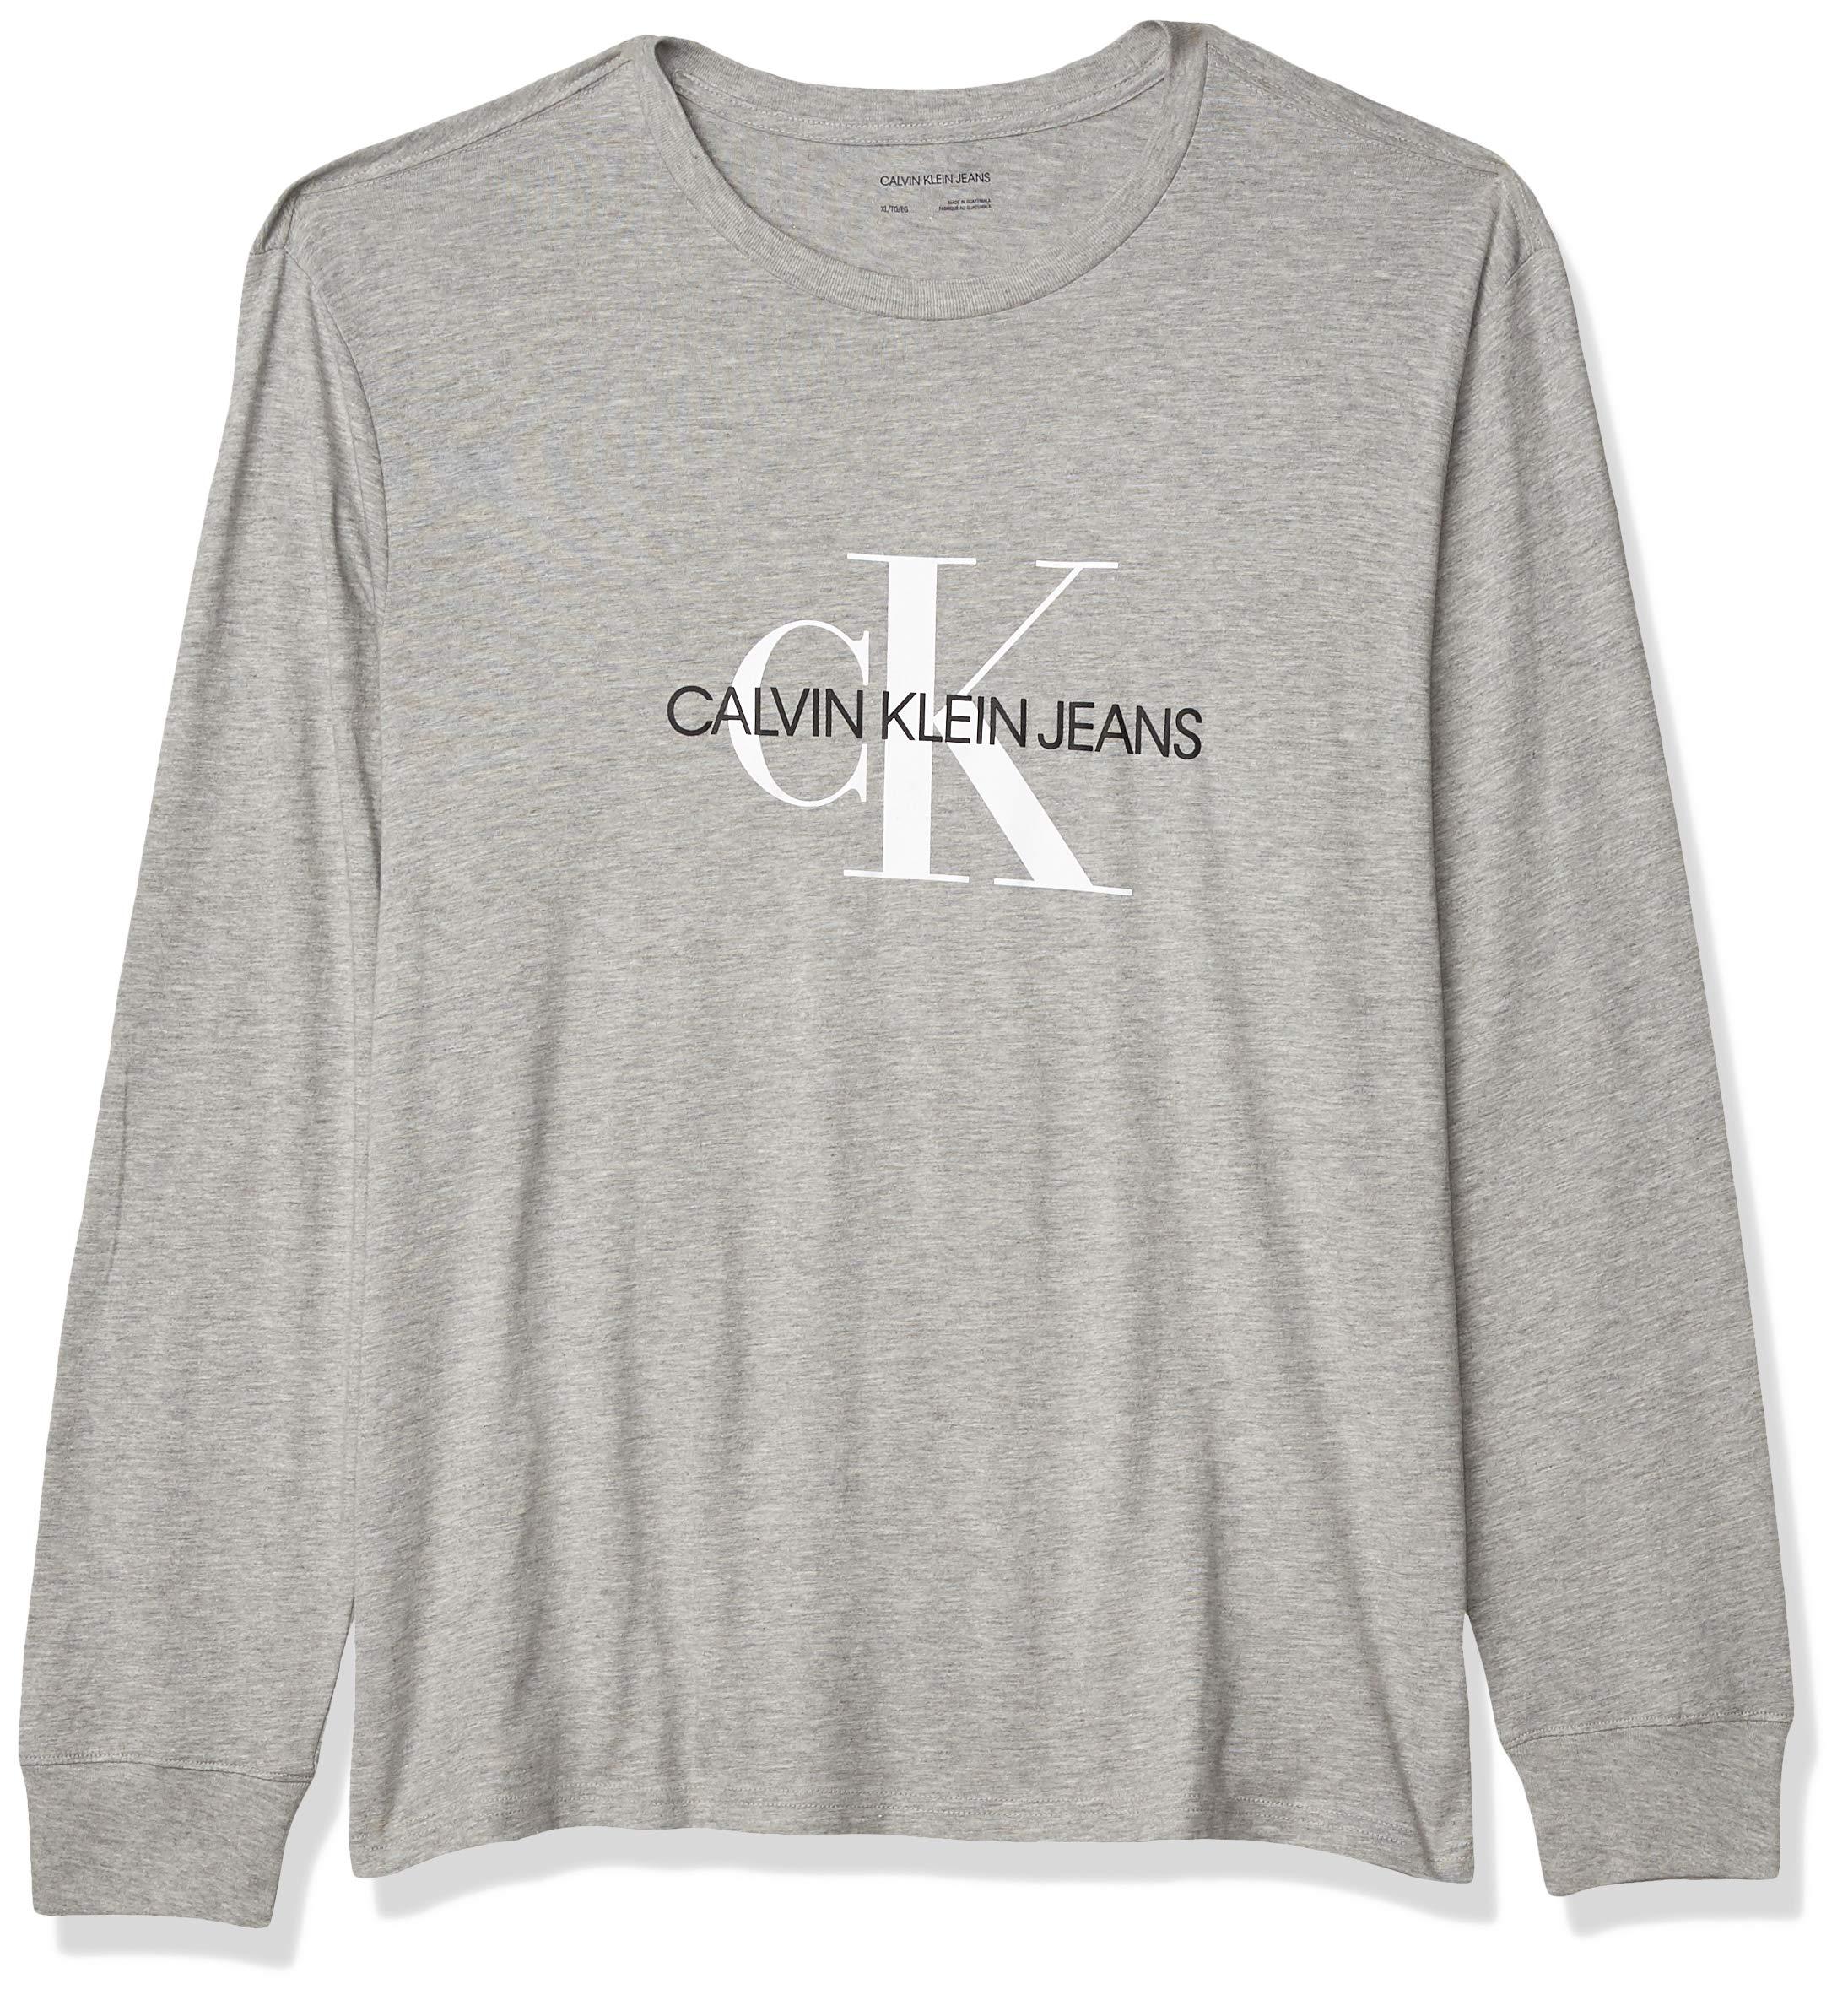 Calvin Klein Cotton Long Sleeve Logo T-shirt in Gray for Men - Save 47% ...